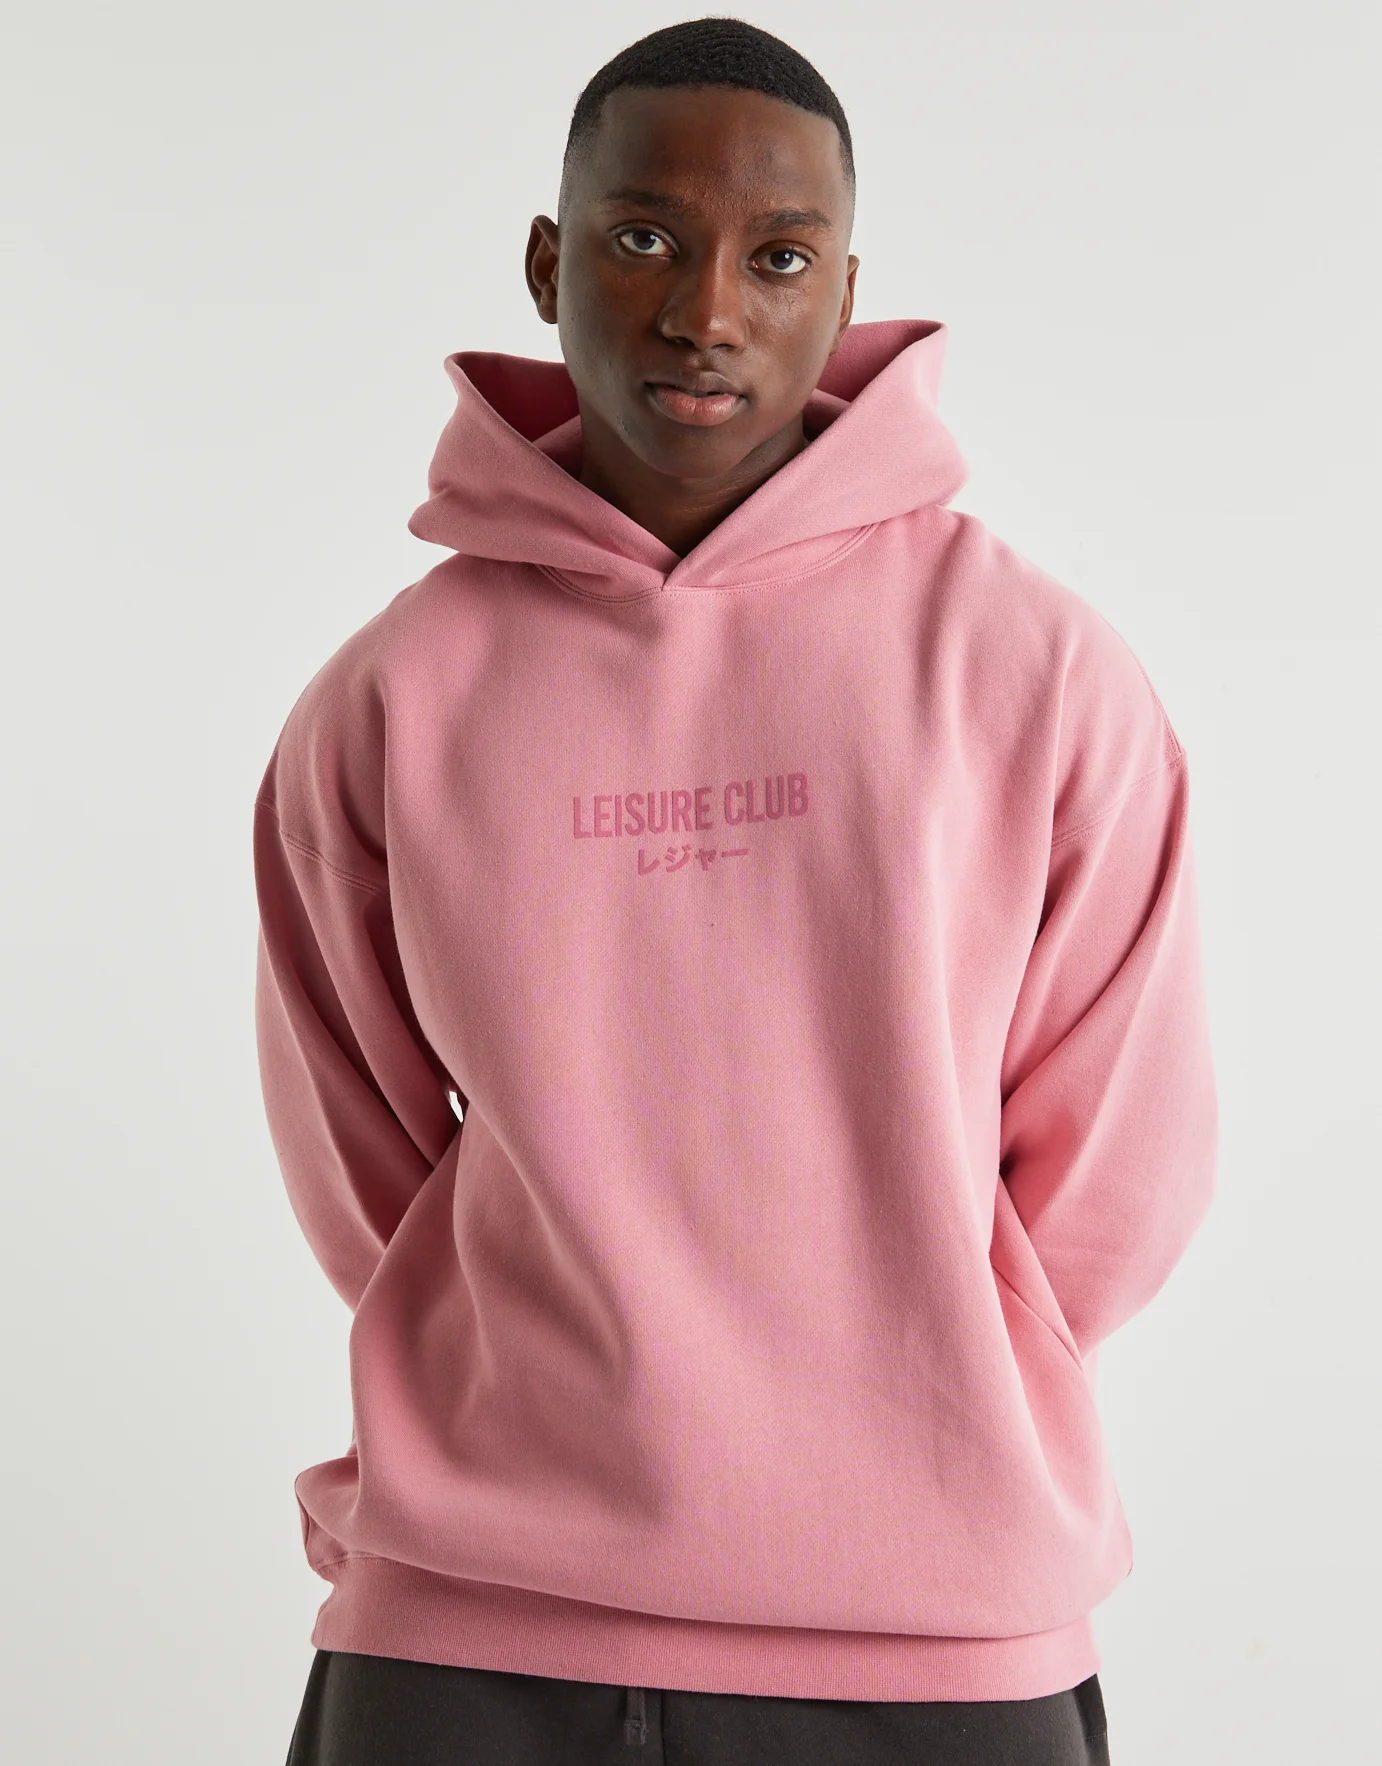 simple hoodie design no string no front pocket